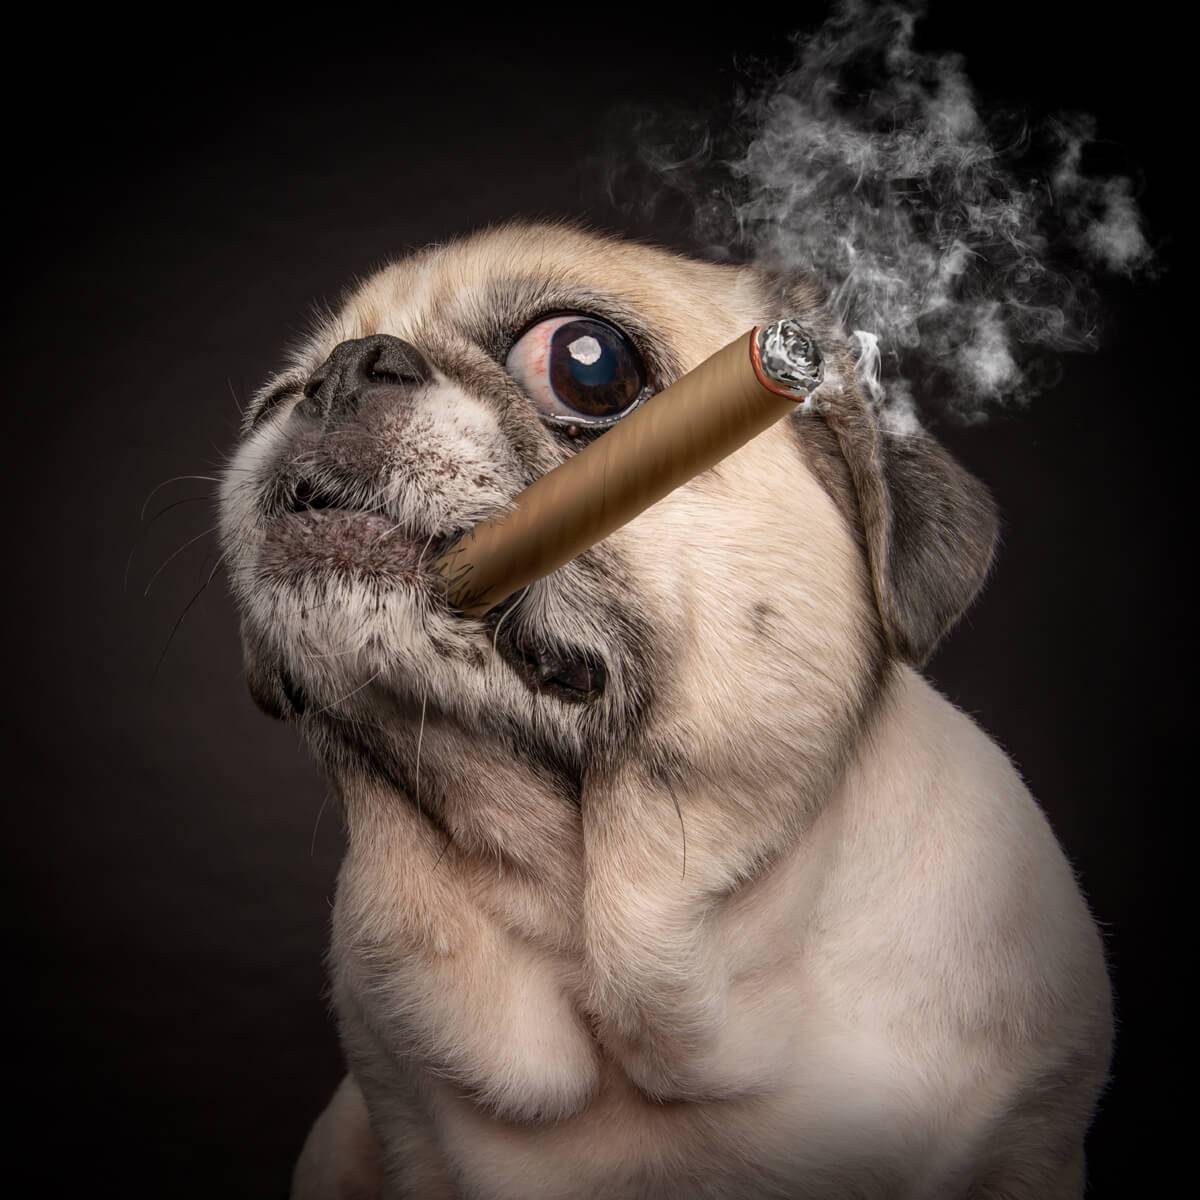 Pug dogfather enjoying a cigar with style.